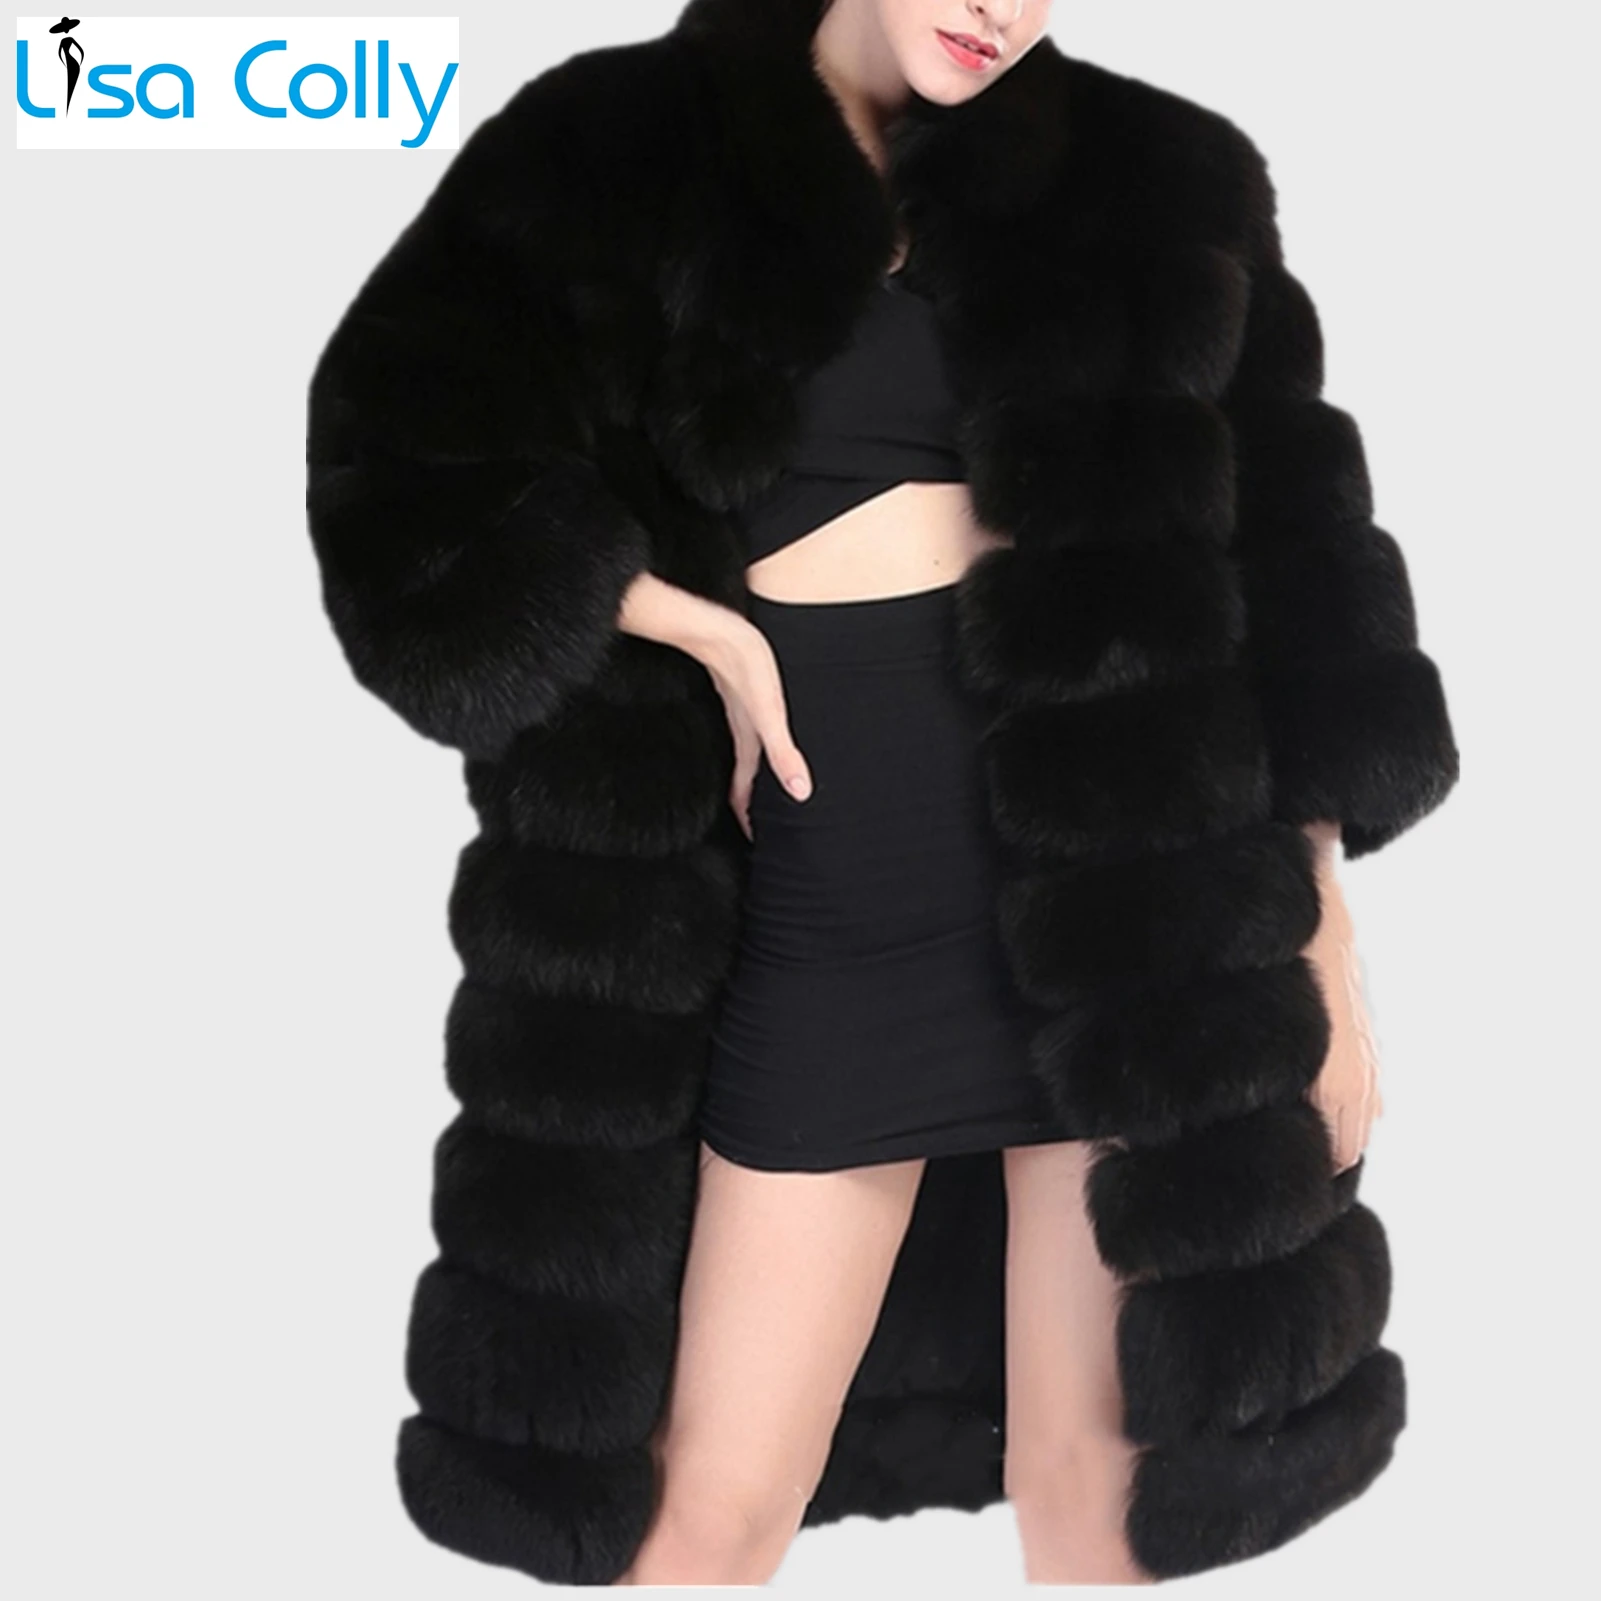 Lisa Colly New Black White Luxury Super Long Faux Fur Coat Jacket Women Thick Warm Winter Coat Fluffy Furs Jacket Coat Overcoat